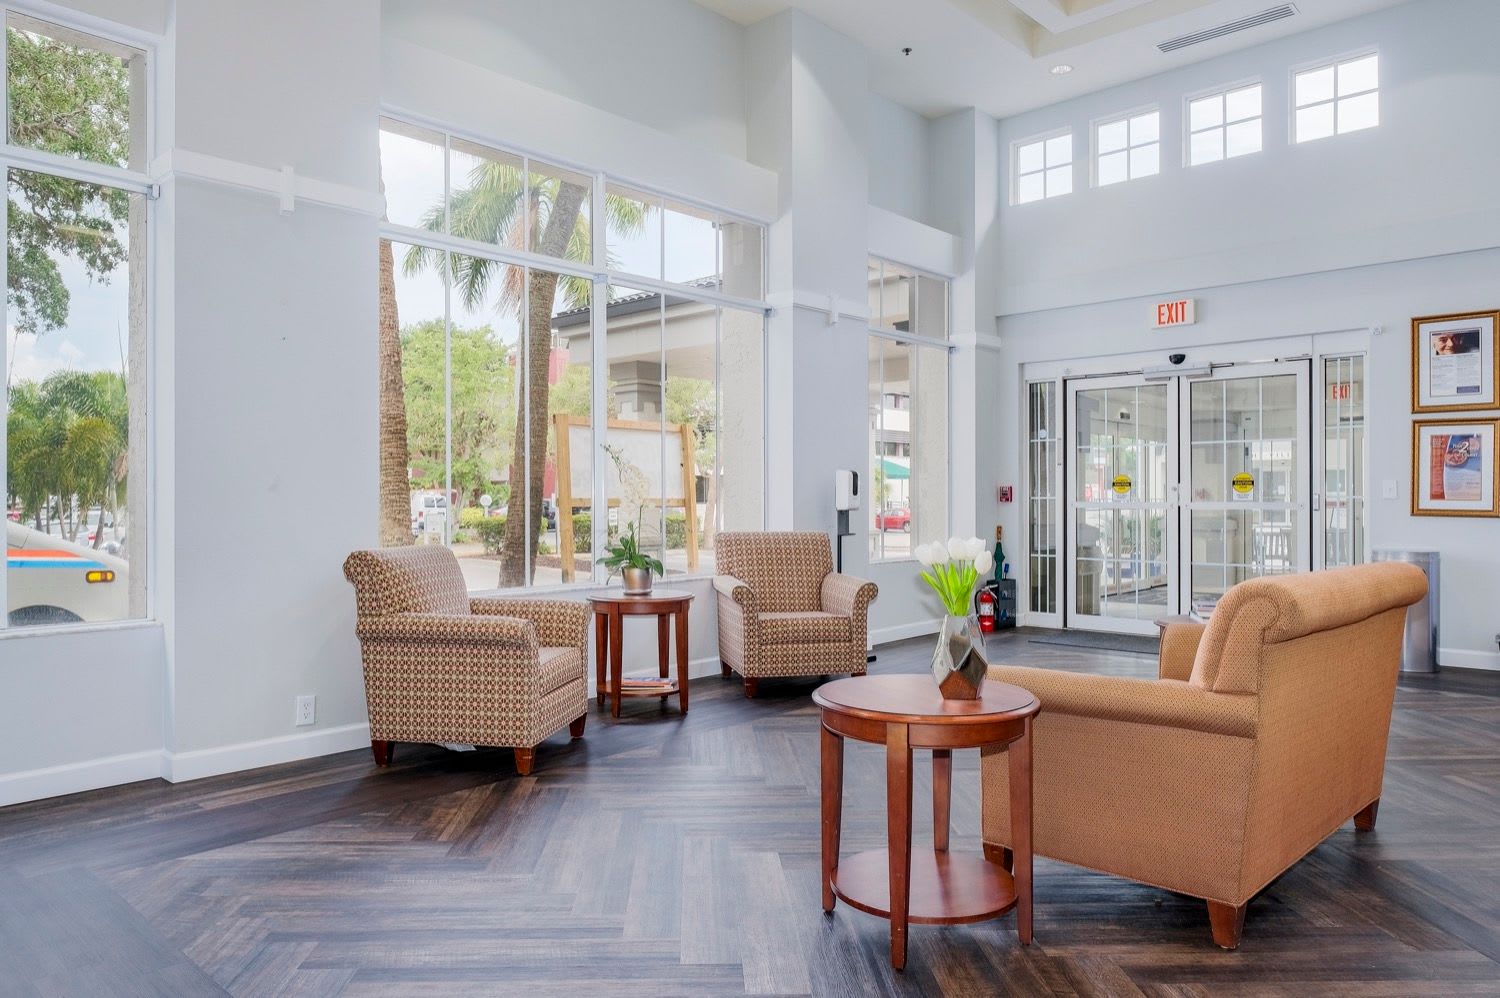 Lobby at Grand Villa of Sarasota in Sarasota, Florida